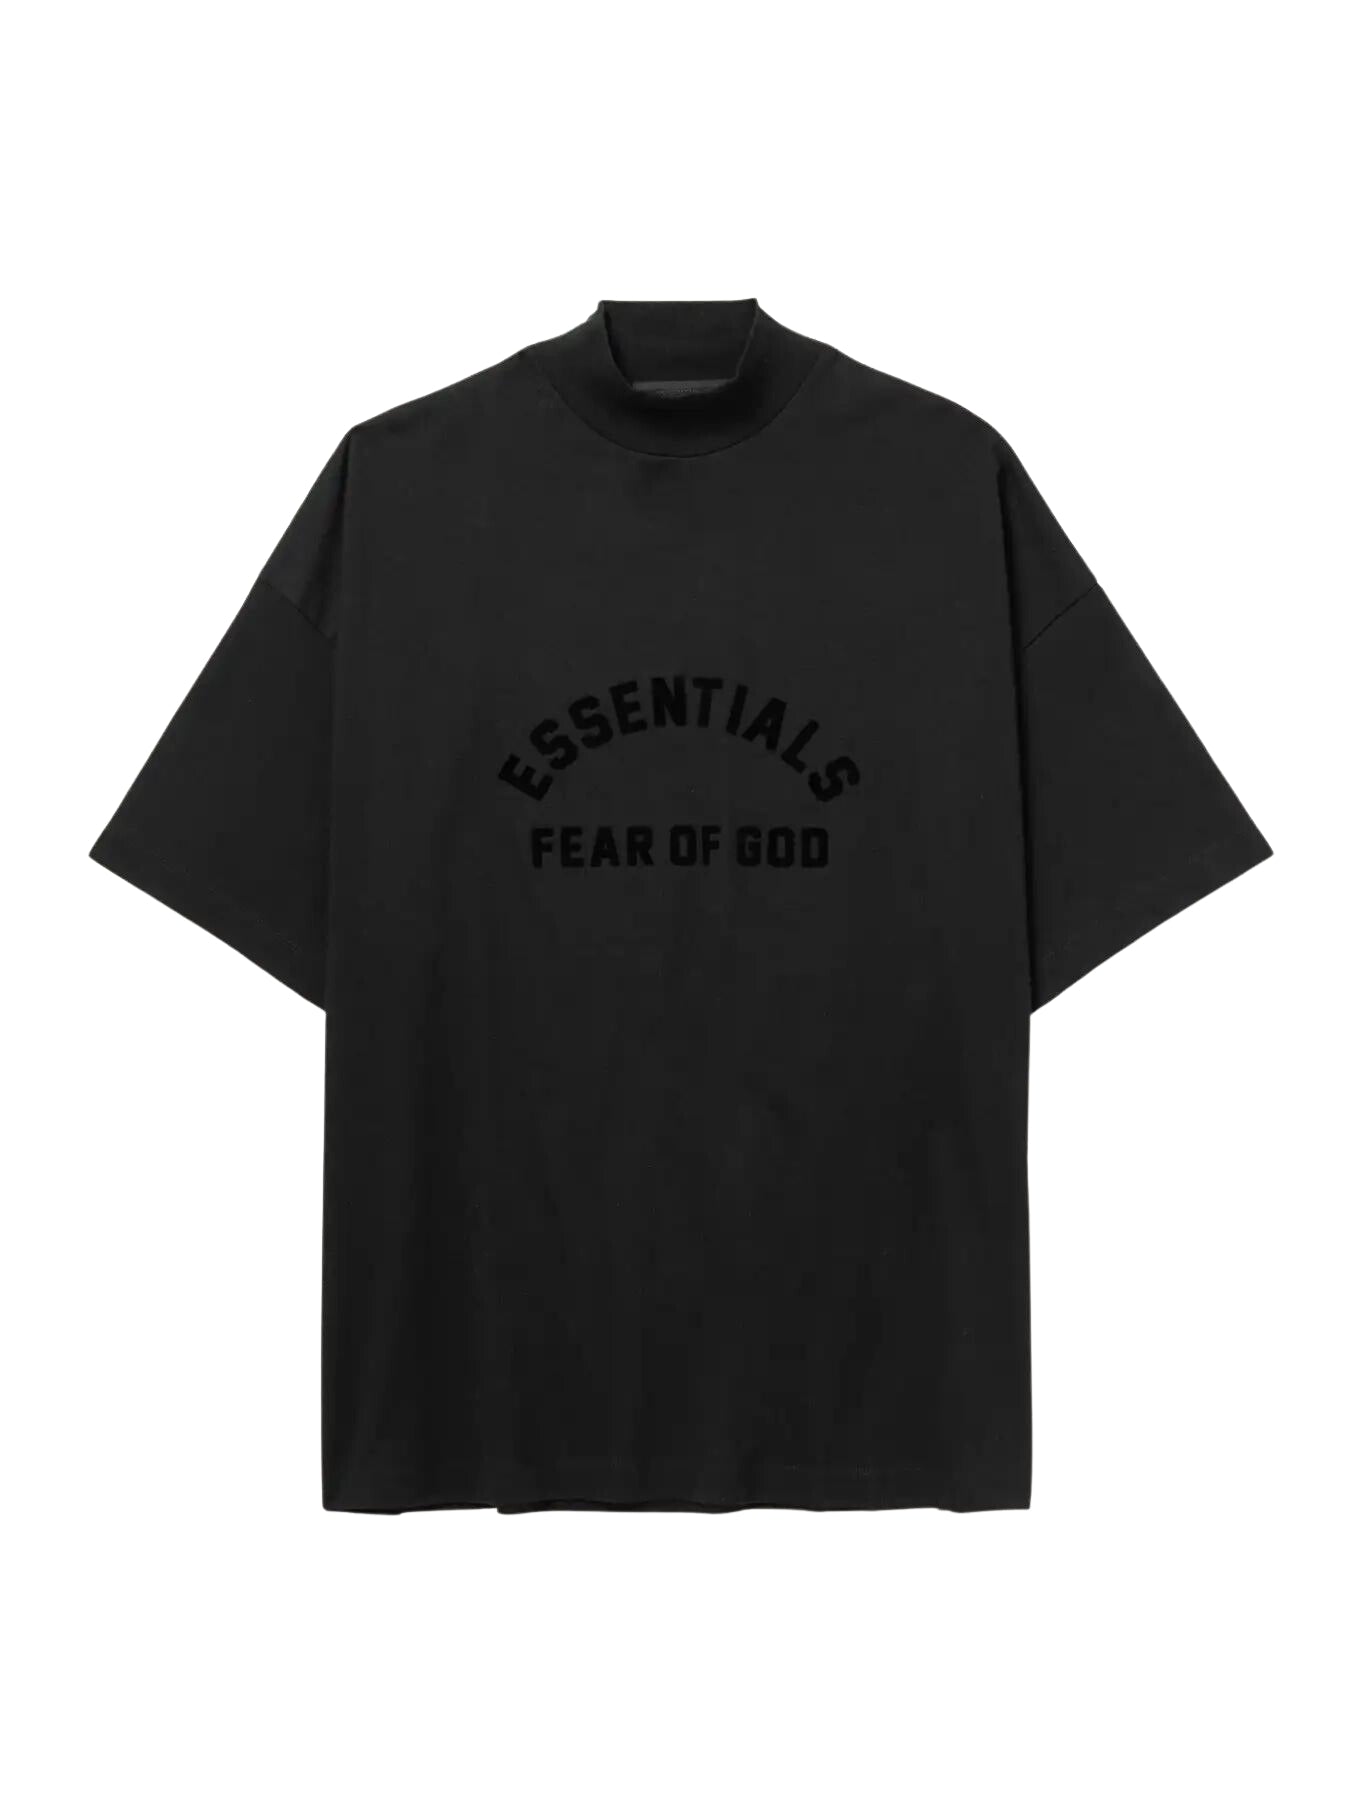 FEAR OF GOD ESSENTIALS JET BLACK T-SHIRT - Hype Locker UK